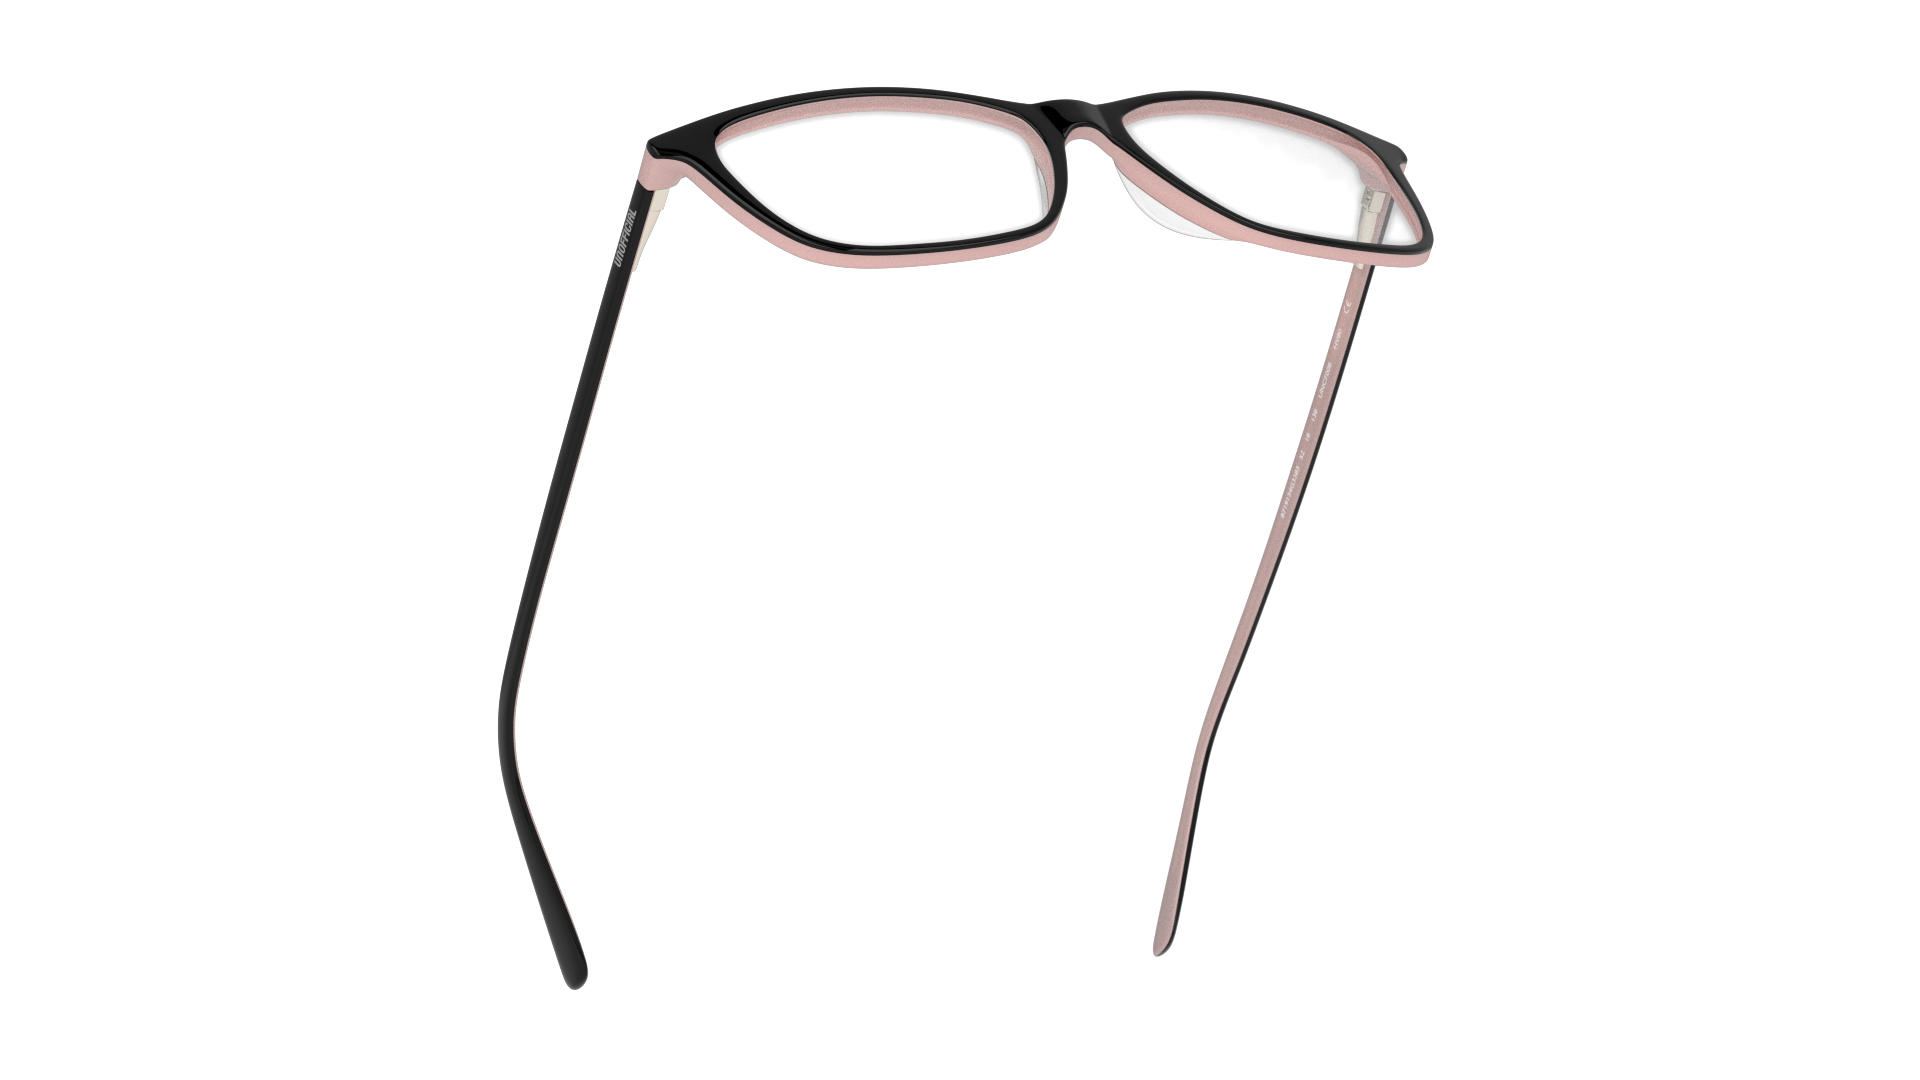 Bottom_Up Unofficial UNOF0306 Glasses Transparent / Black